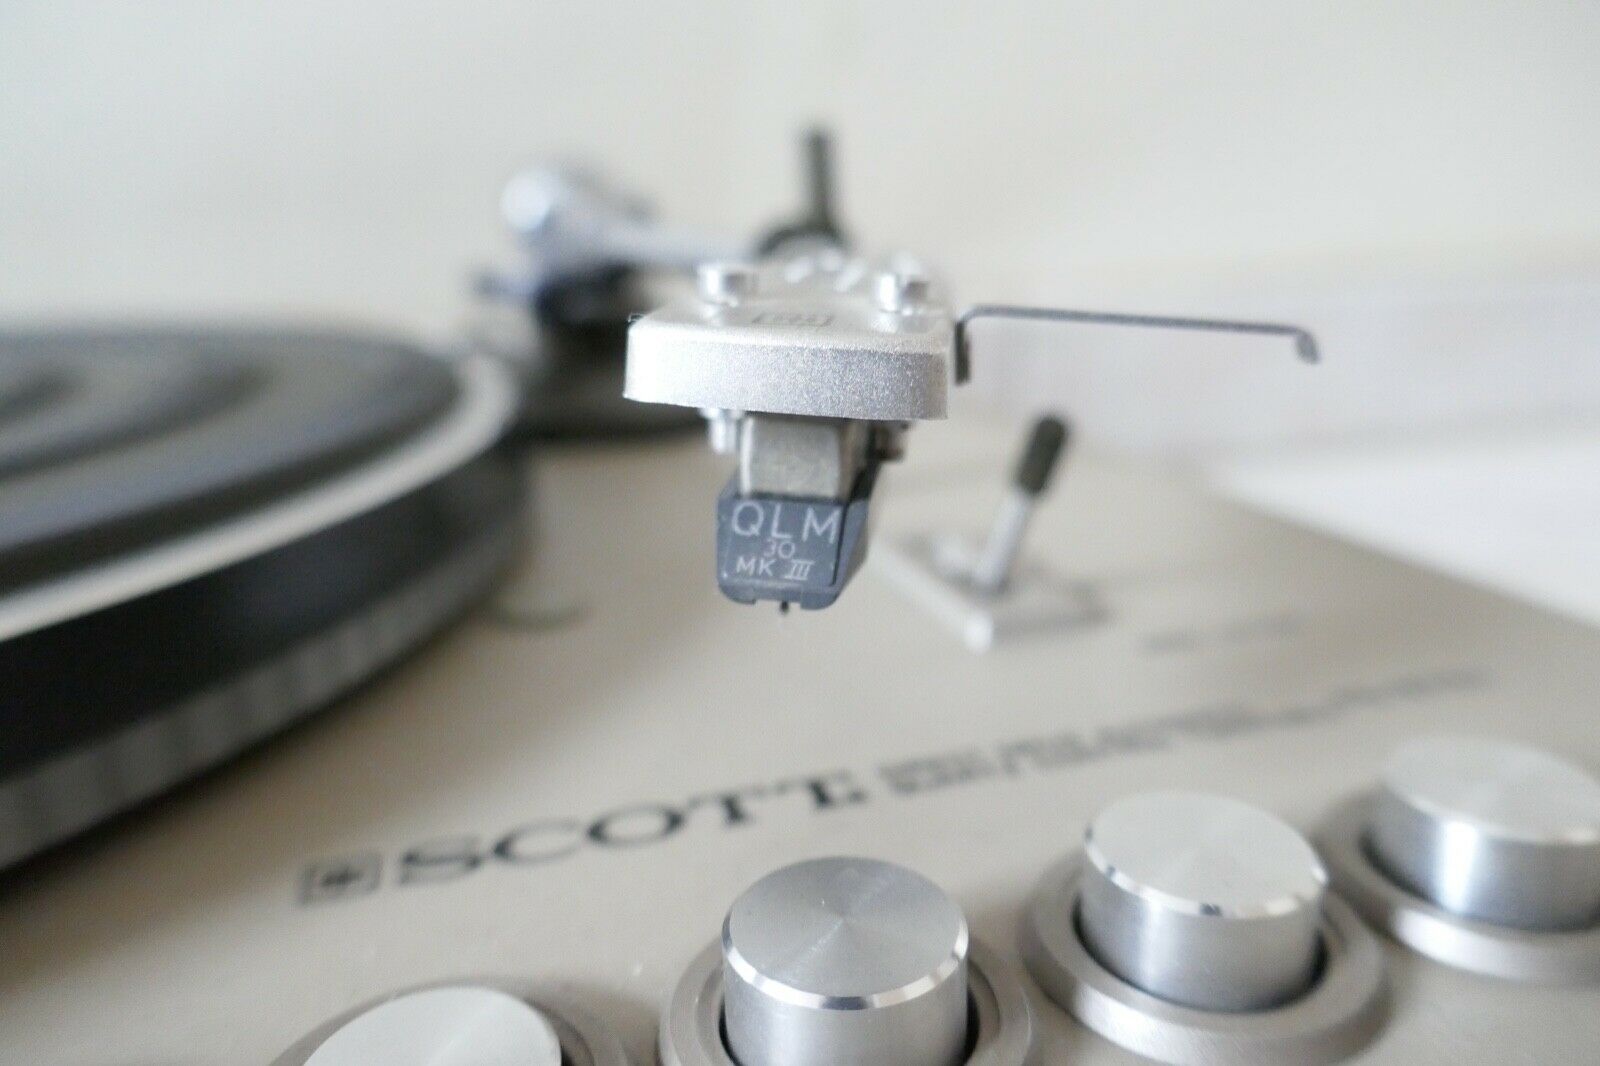 platine vinyle turntable scott PS-97XV vintage occasion